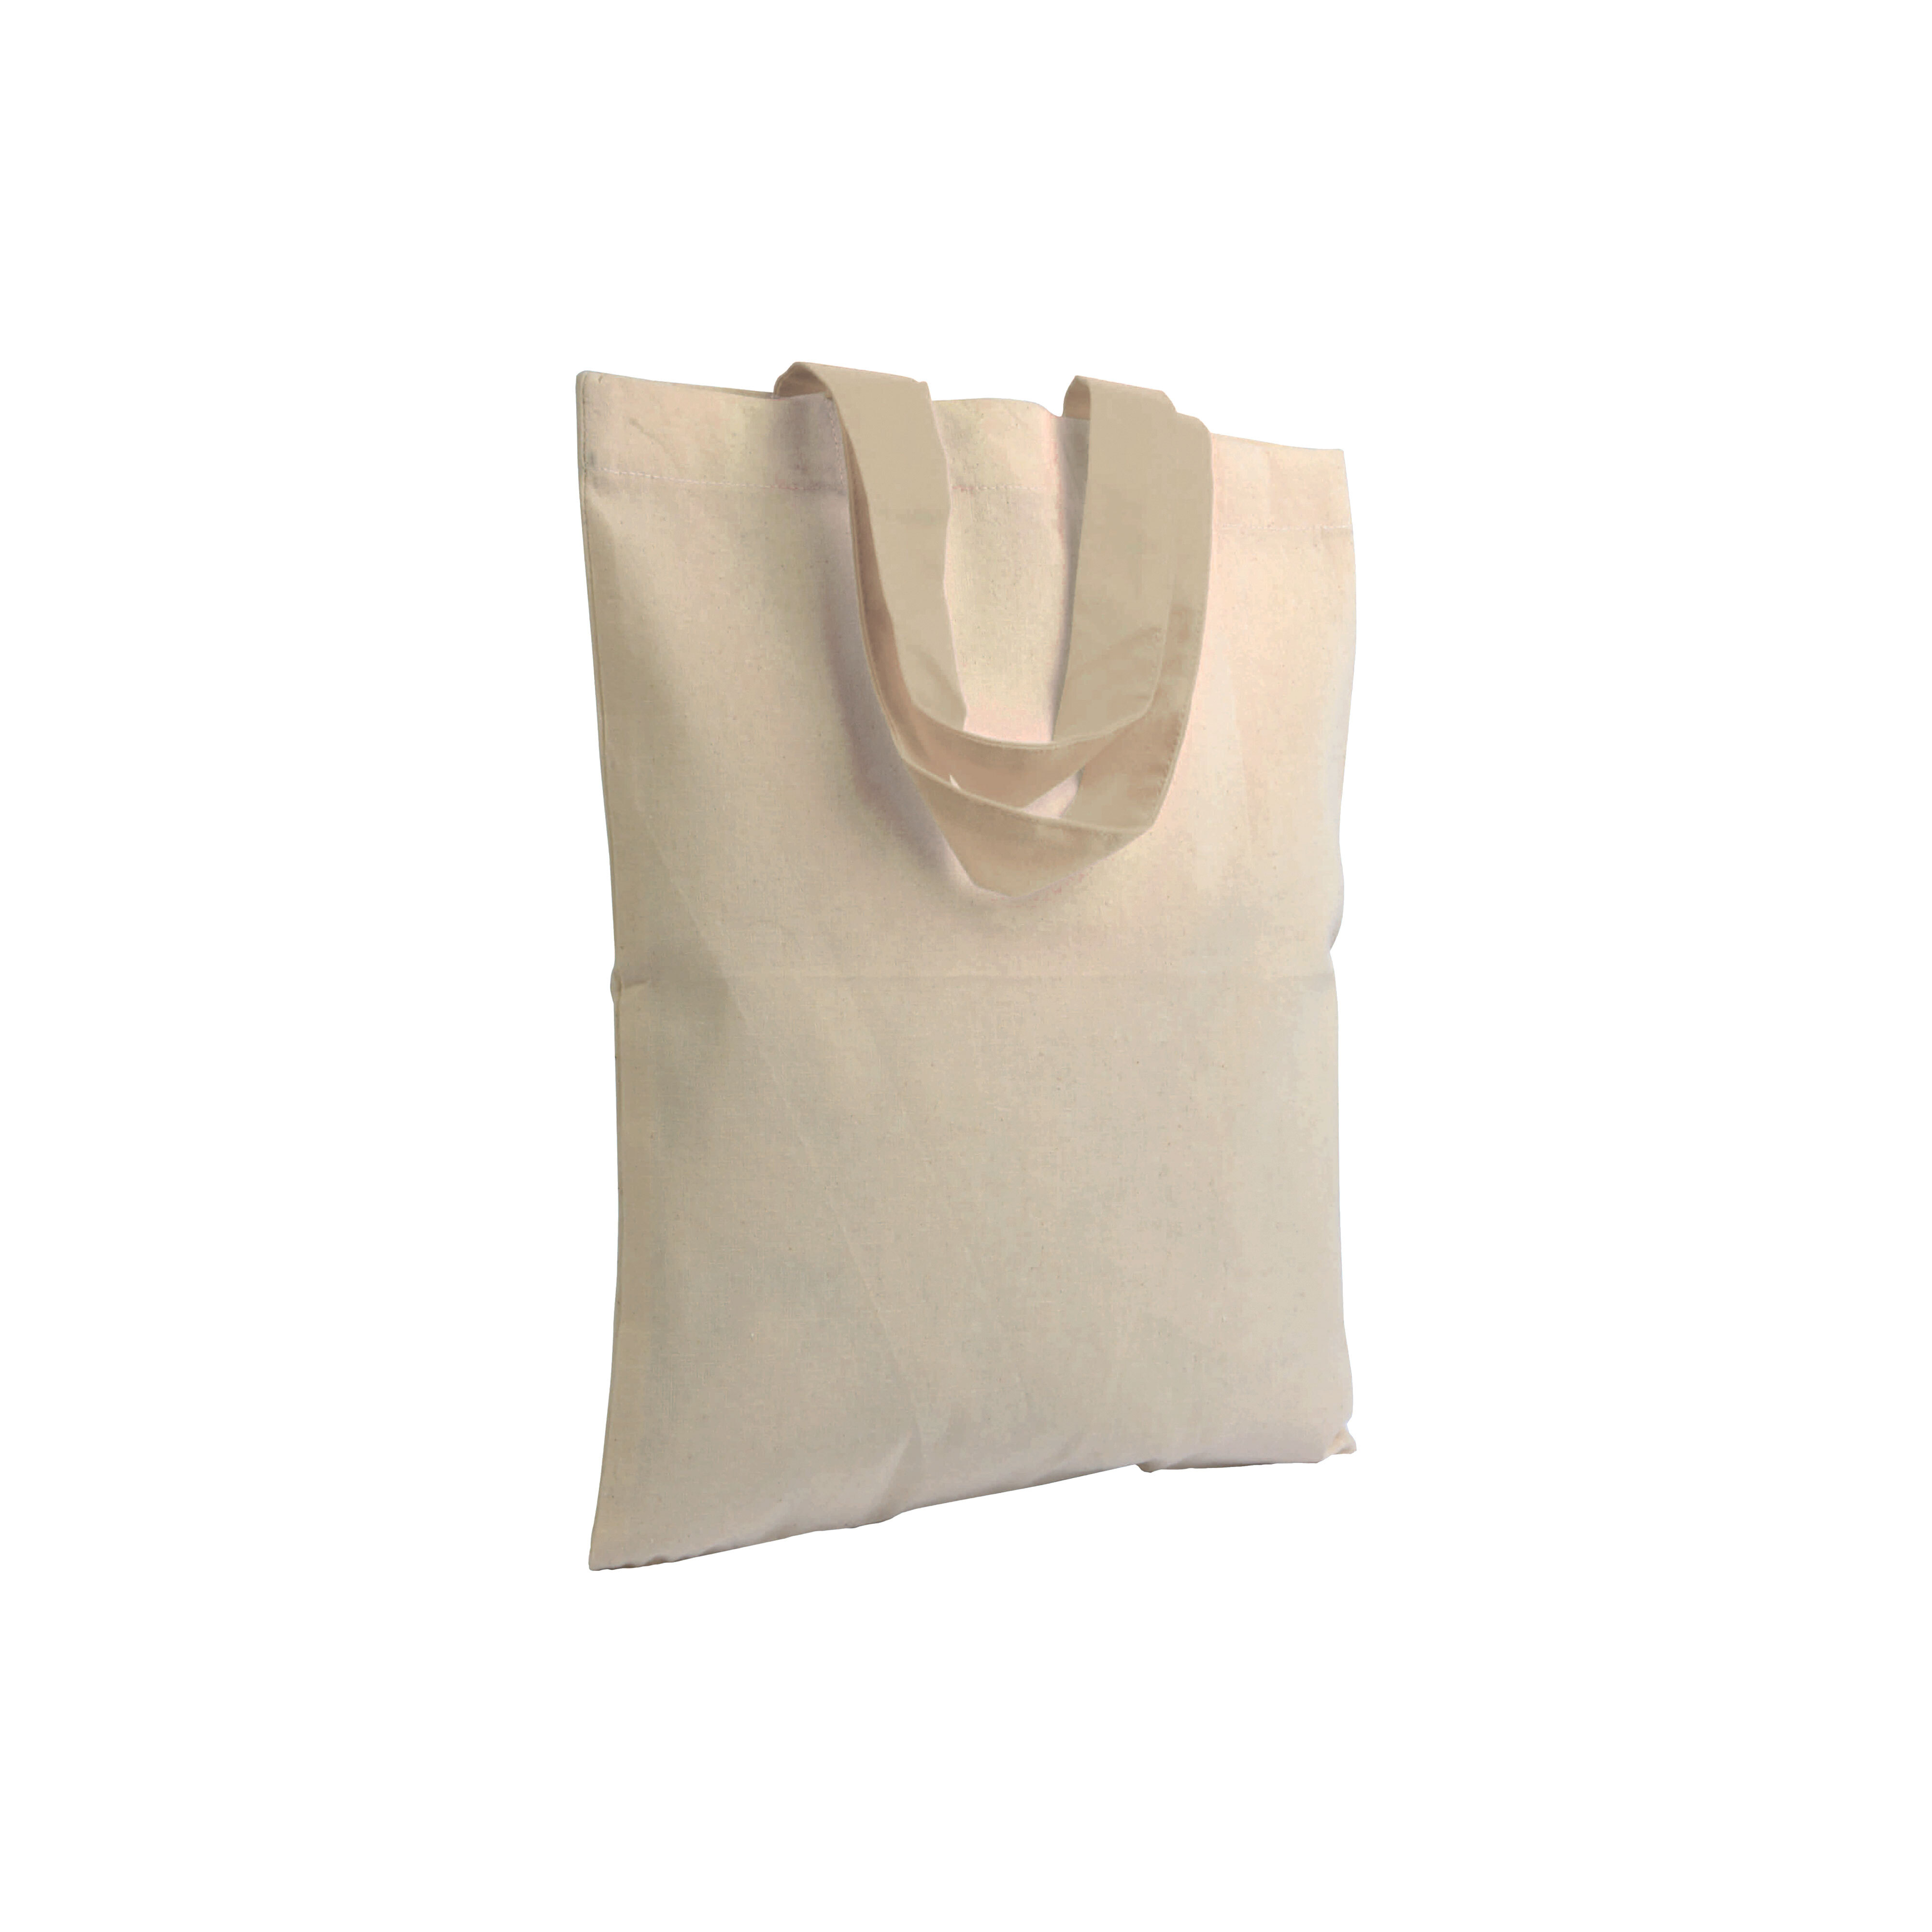 Shopper mini in cotone naturale 135 g/m2, manici corti colorati - Handle - 1612322